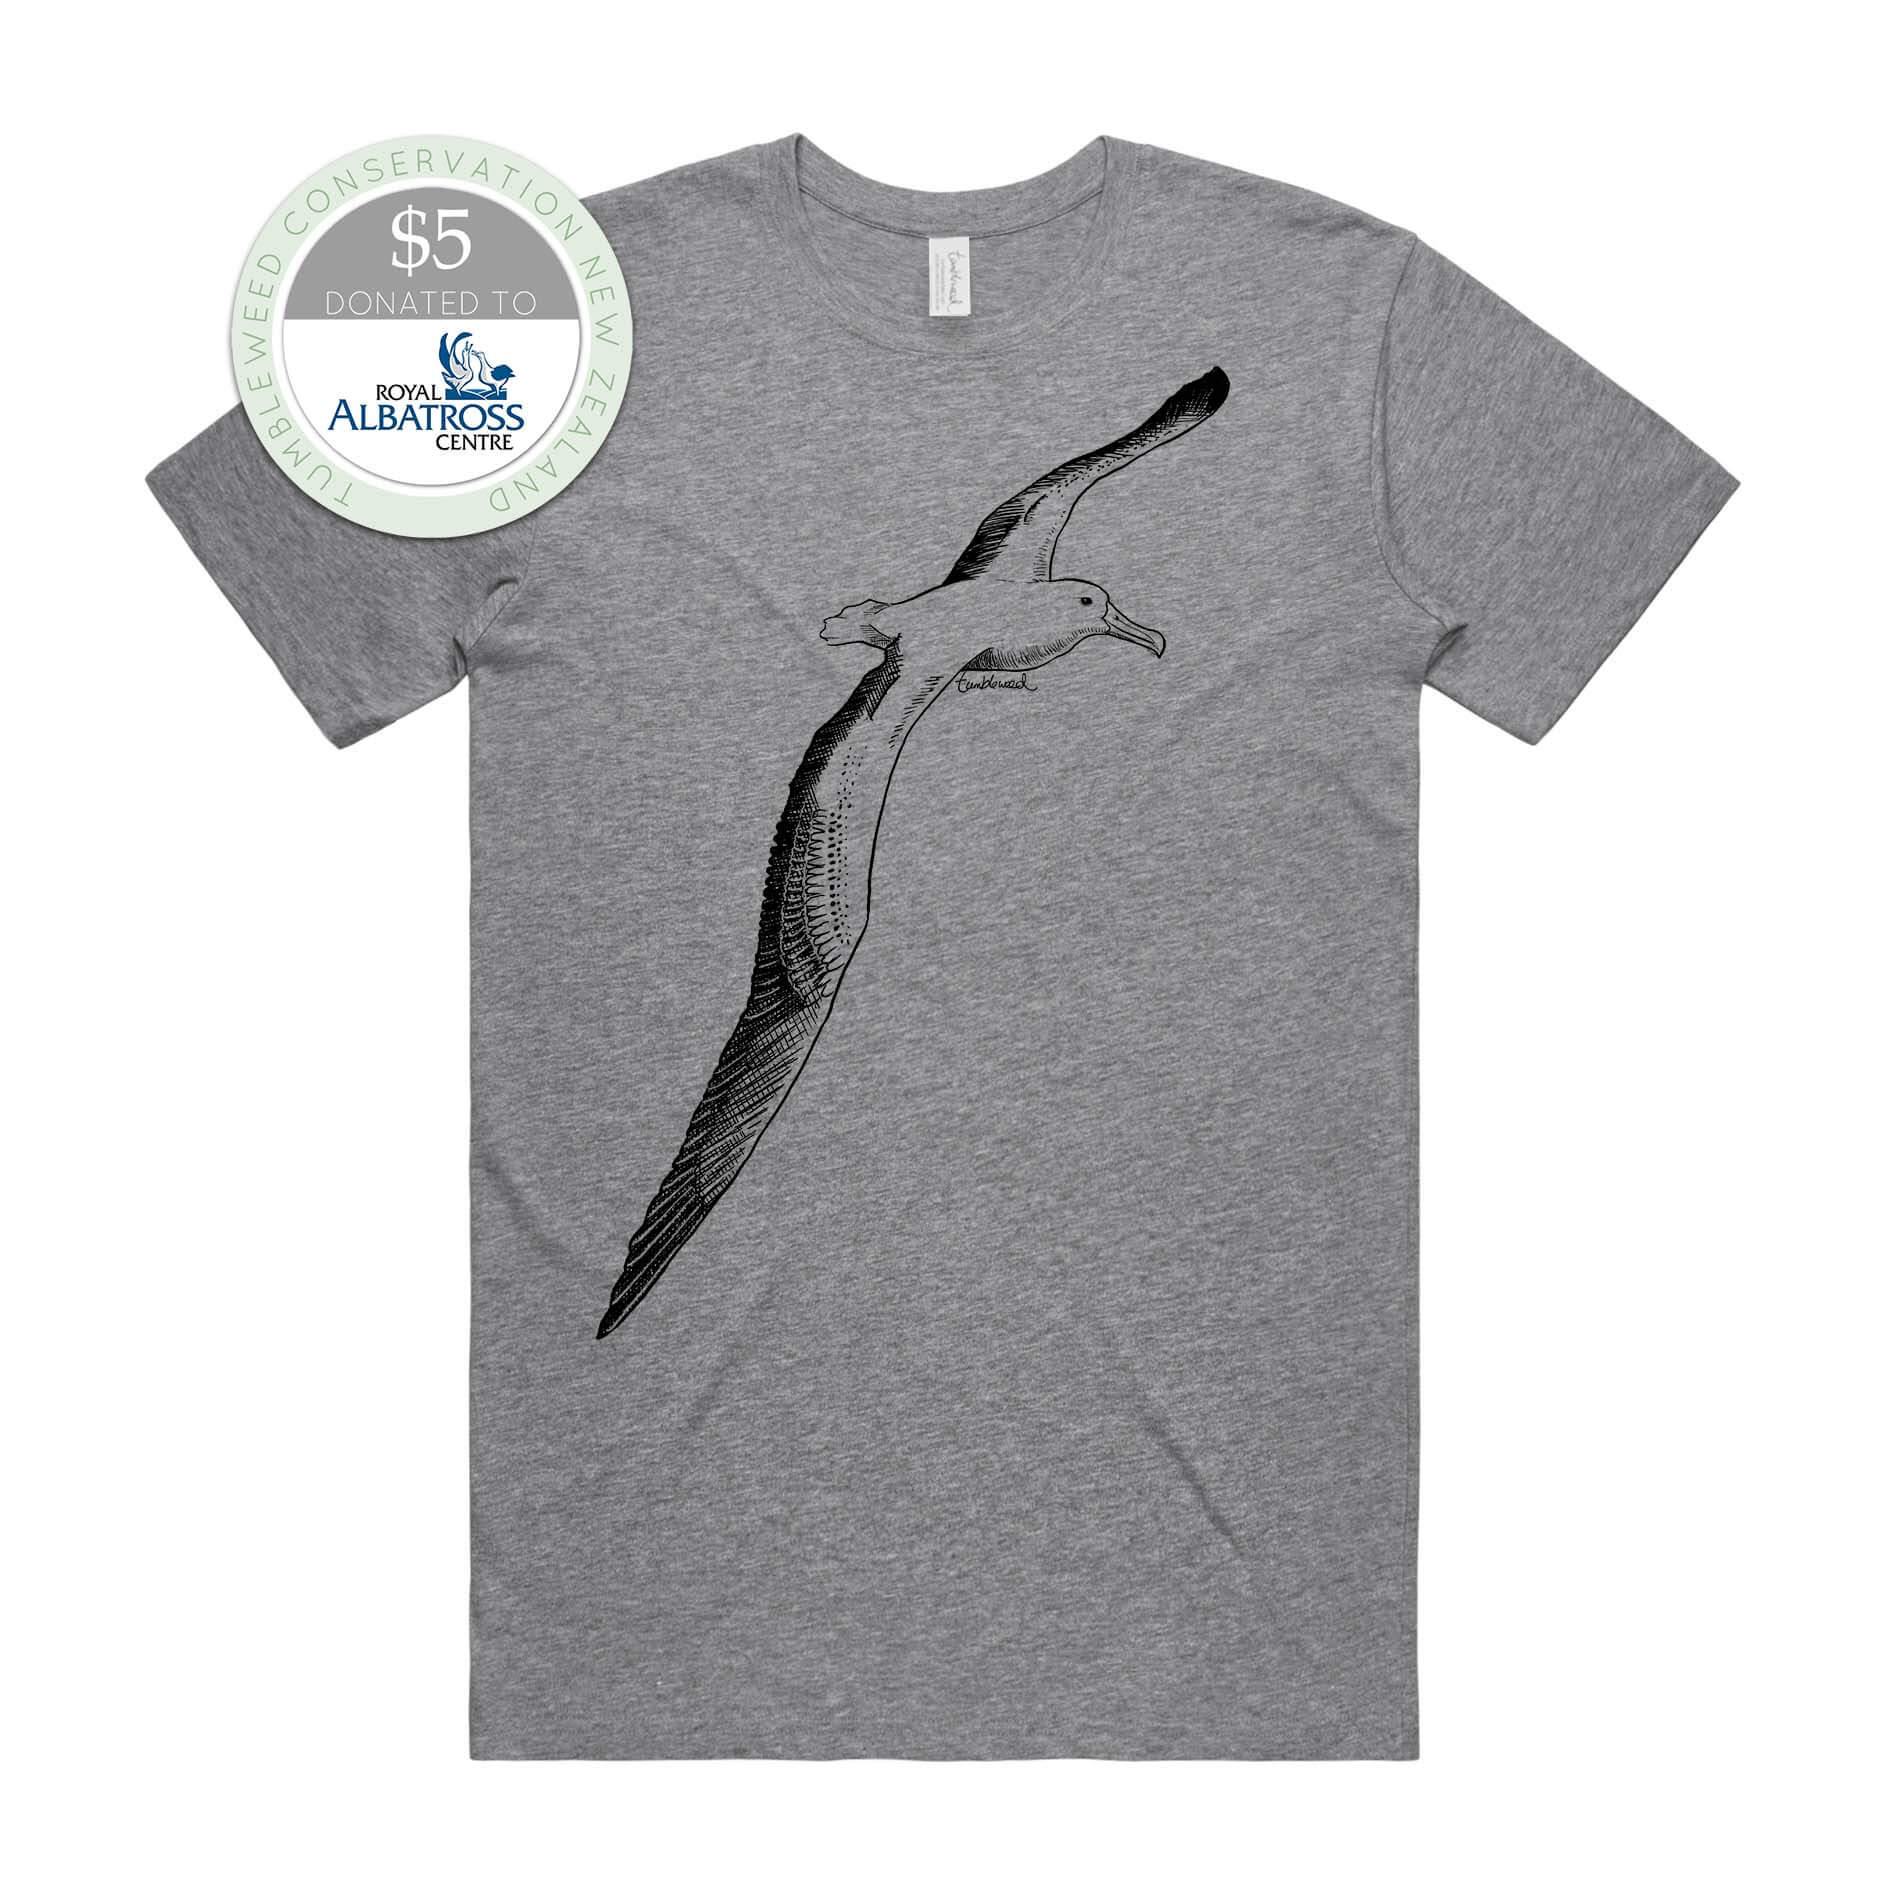 Grey marle, male t-shirt featuring a screen printed albatross design.